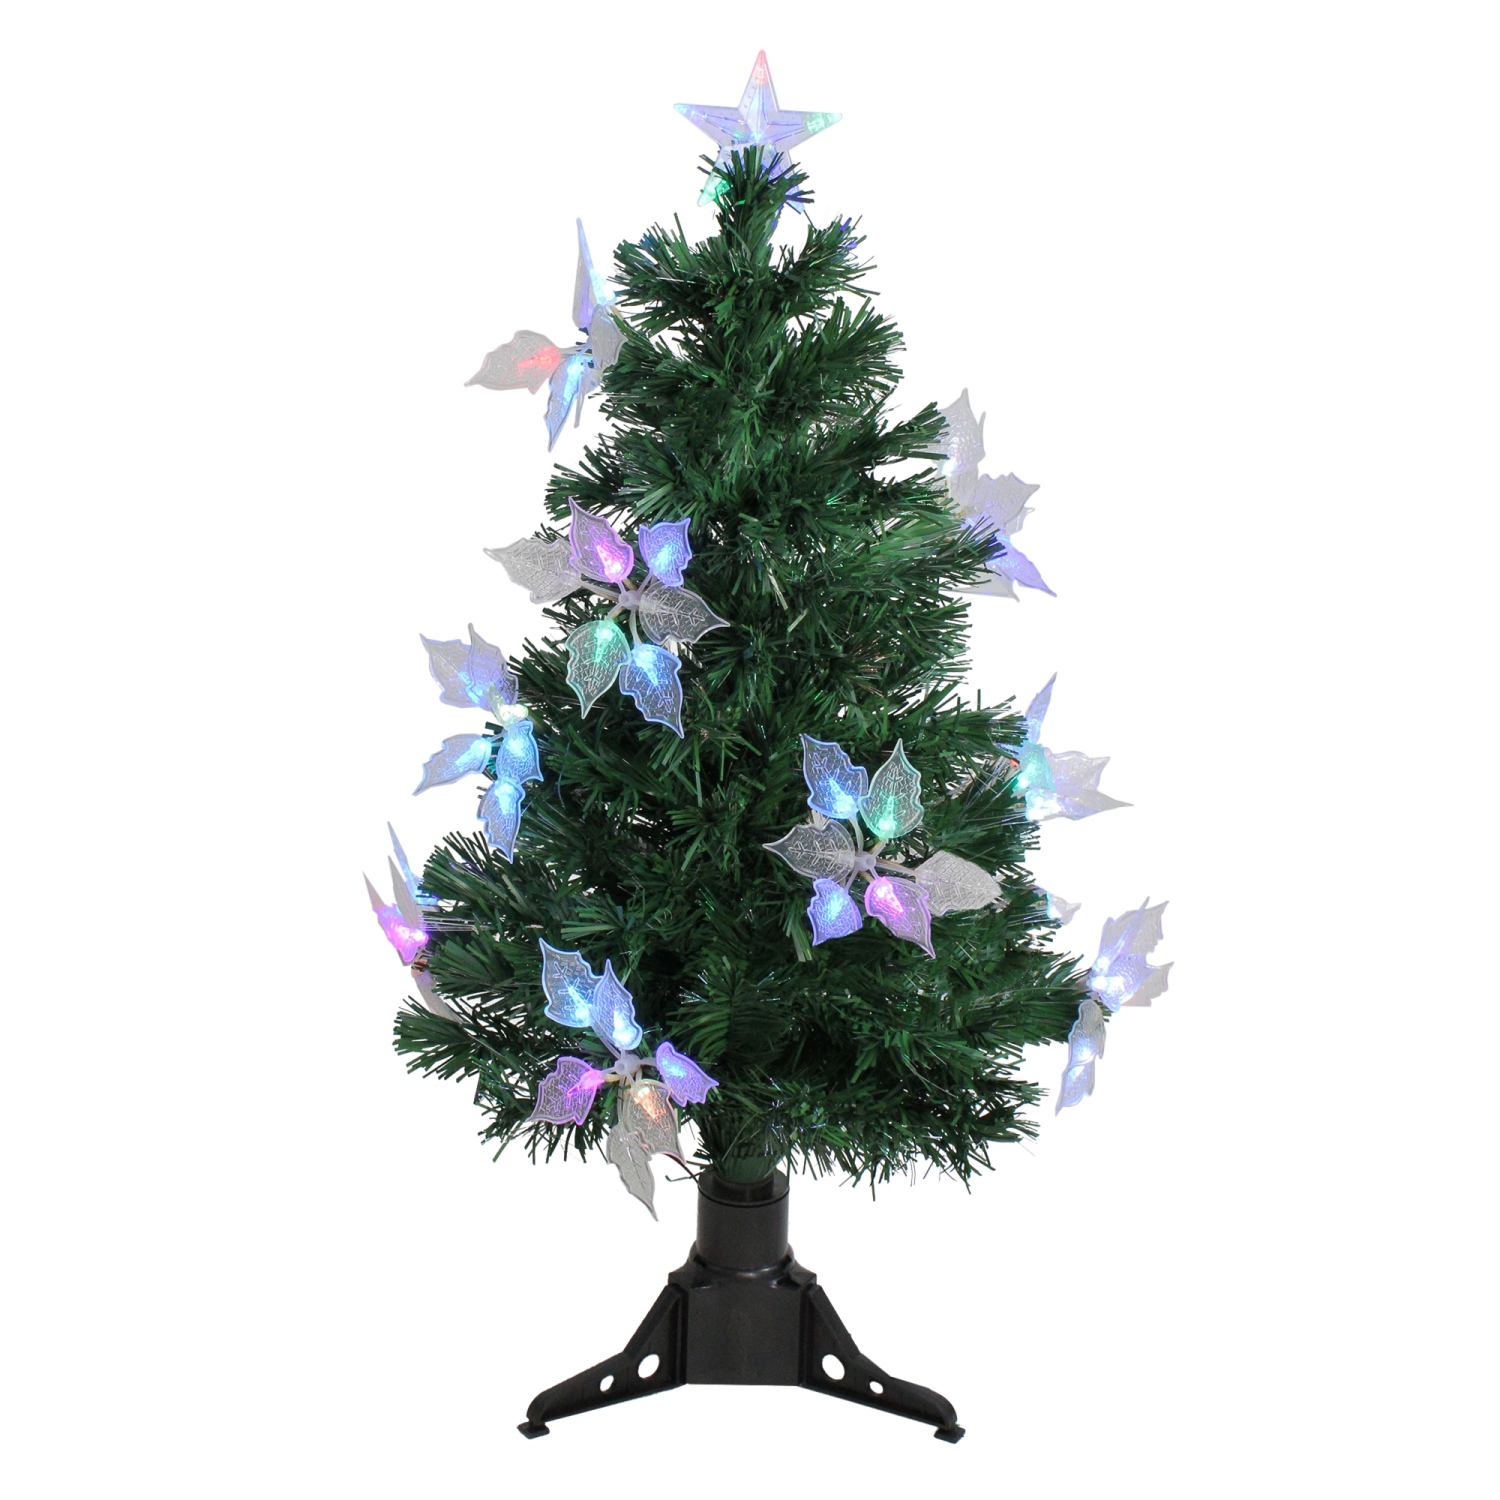 3' Pre-Lit Fiber Optic Artificial Christmas Tree with Flowers - Multi Lights